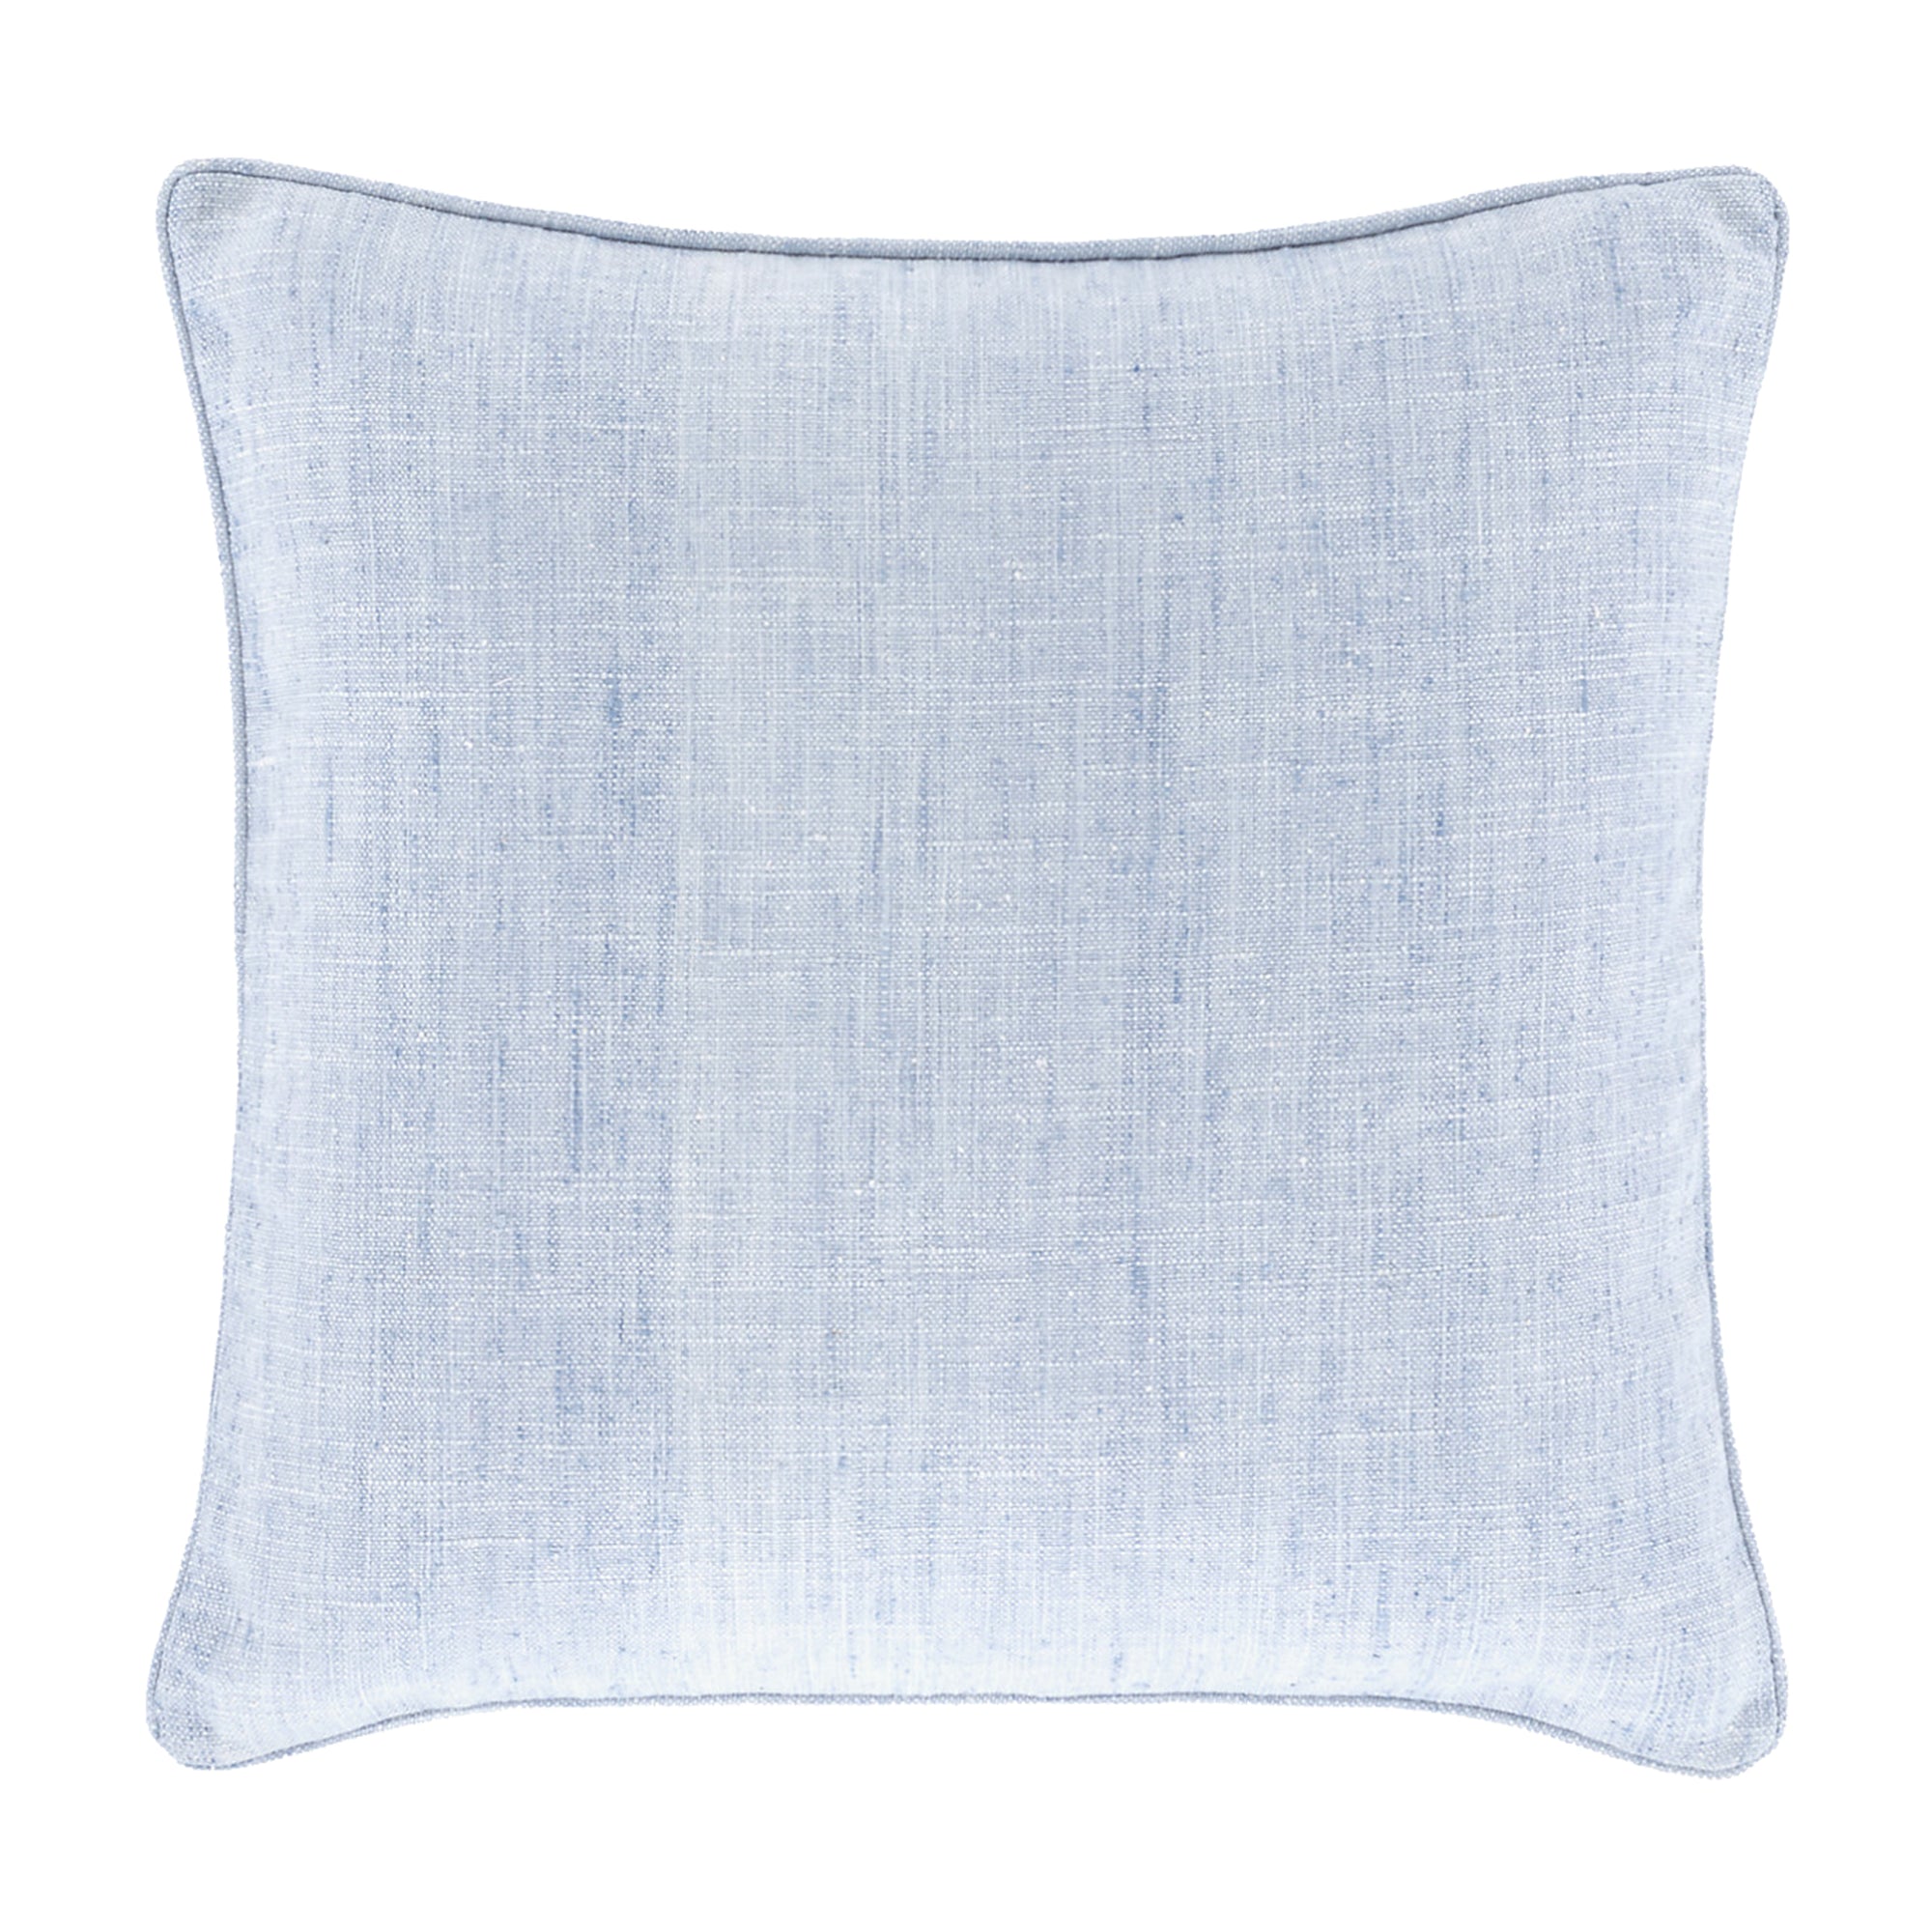 Greylock Outdoor Pillow